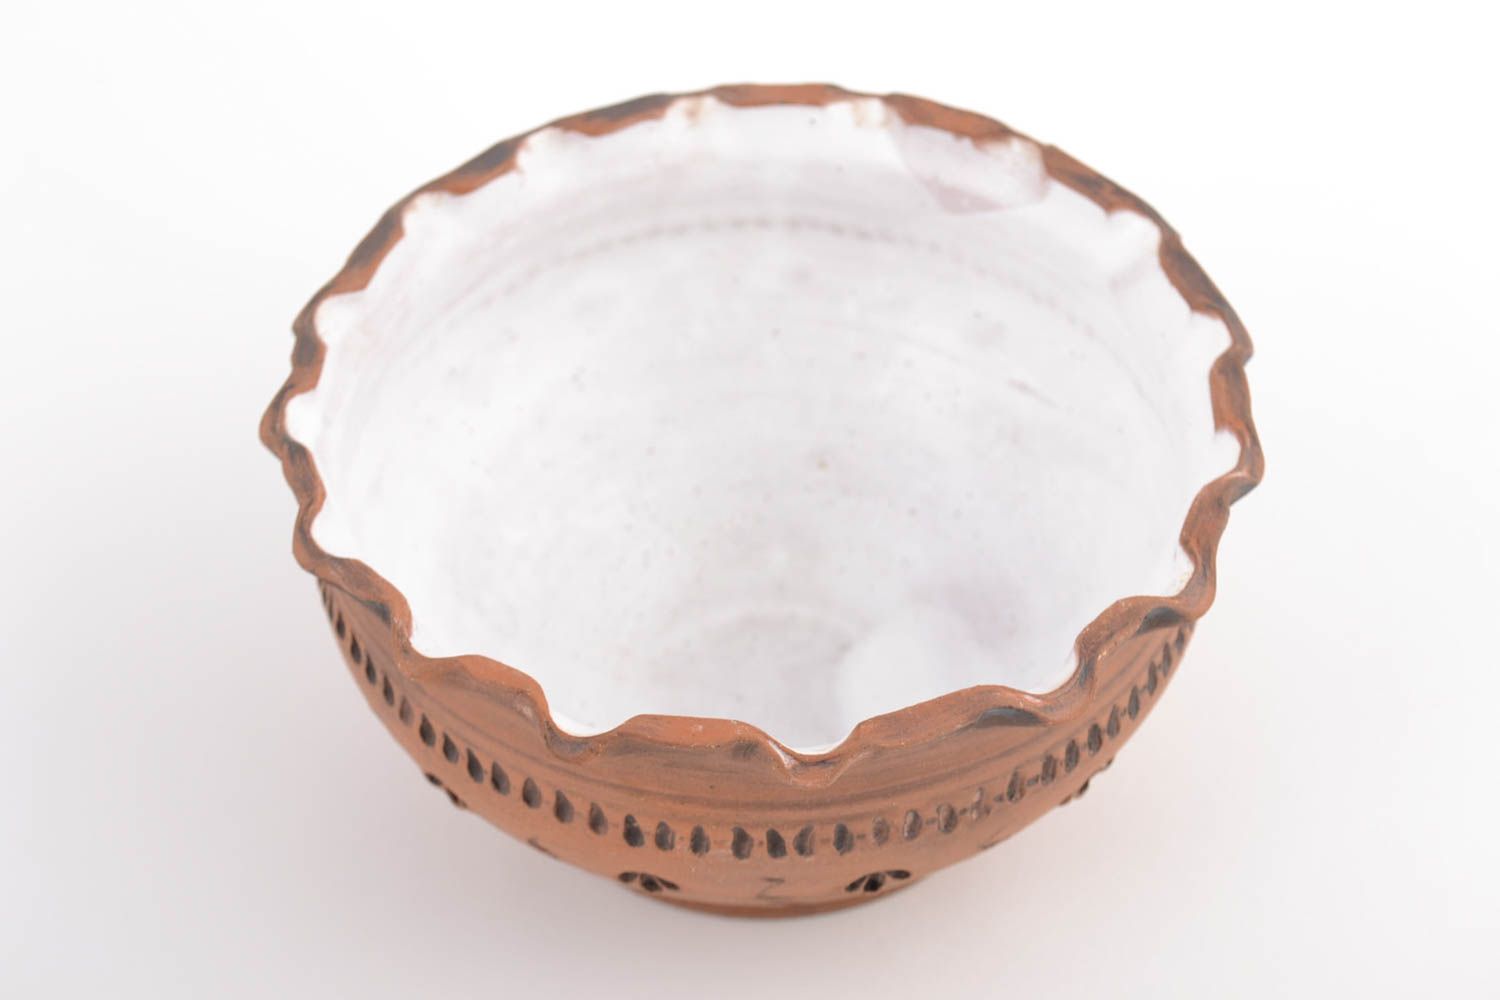 6 15 oz white glaze mixing bowl handmade kitchen pottery 0,85 lb фото 3